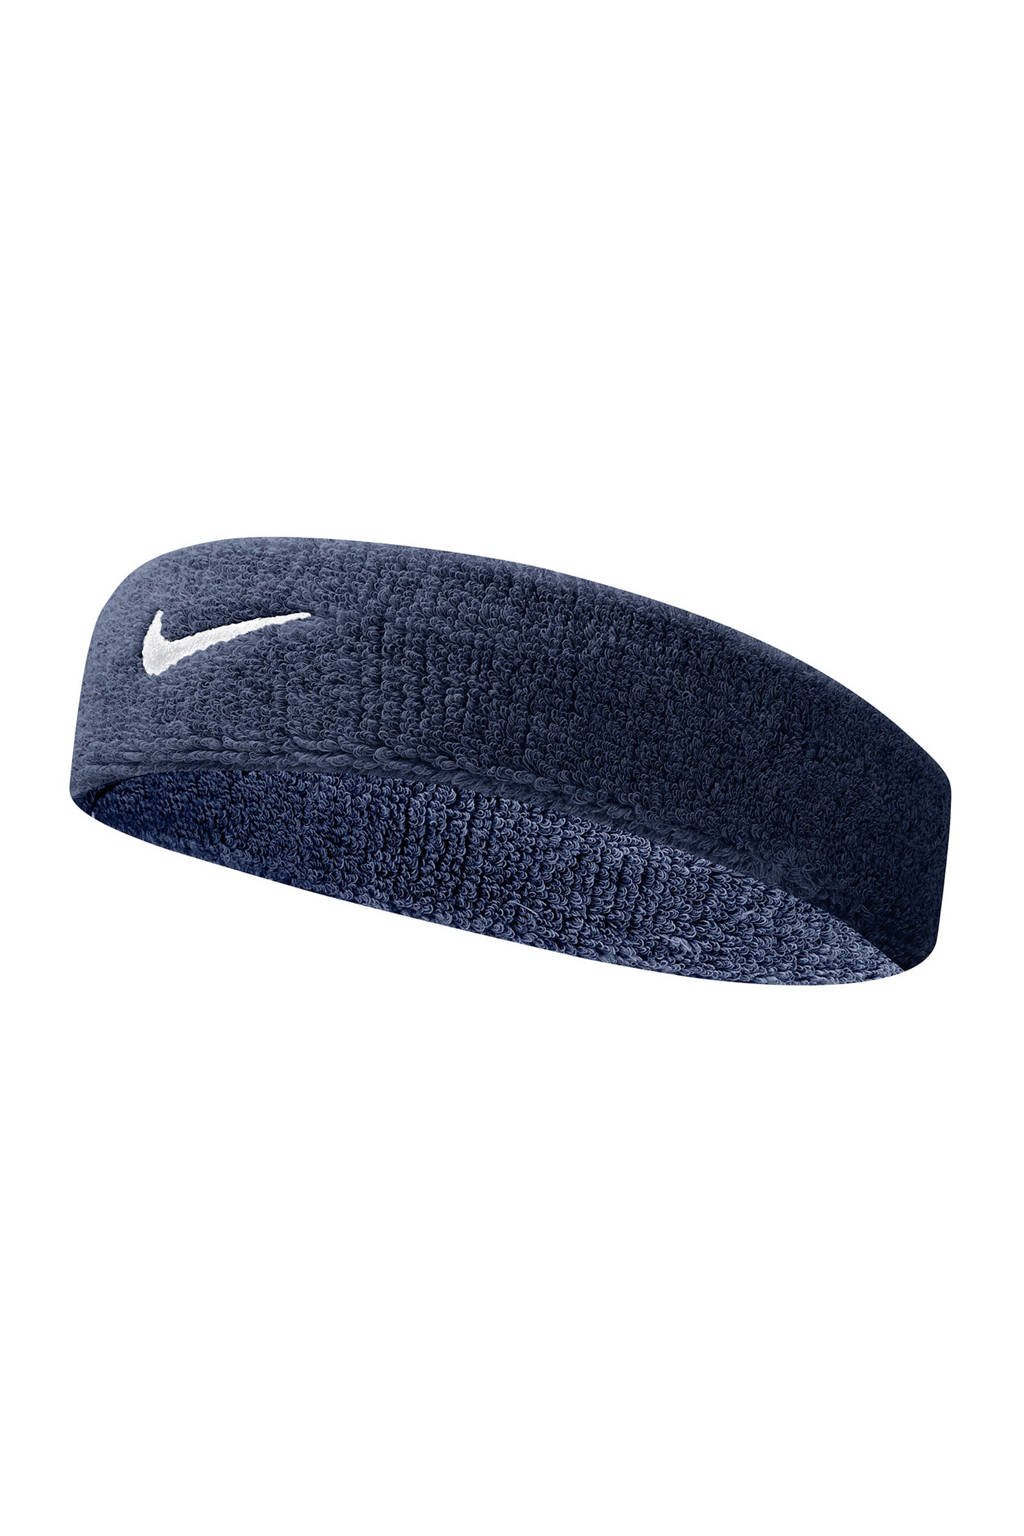 Raad Dezelfde kalender Nike hoofdband Swoosh donkerblauw/wit | wehkamp